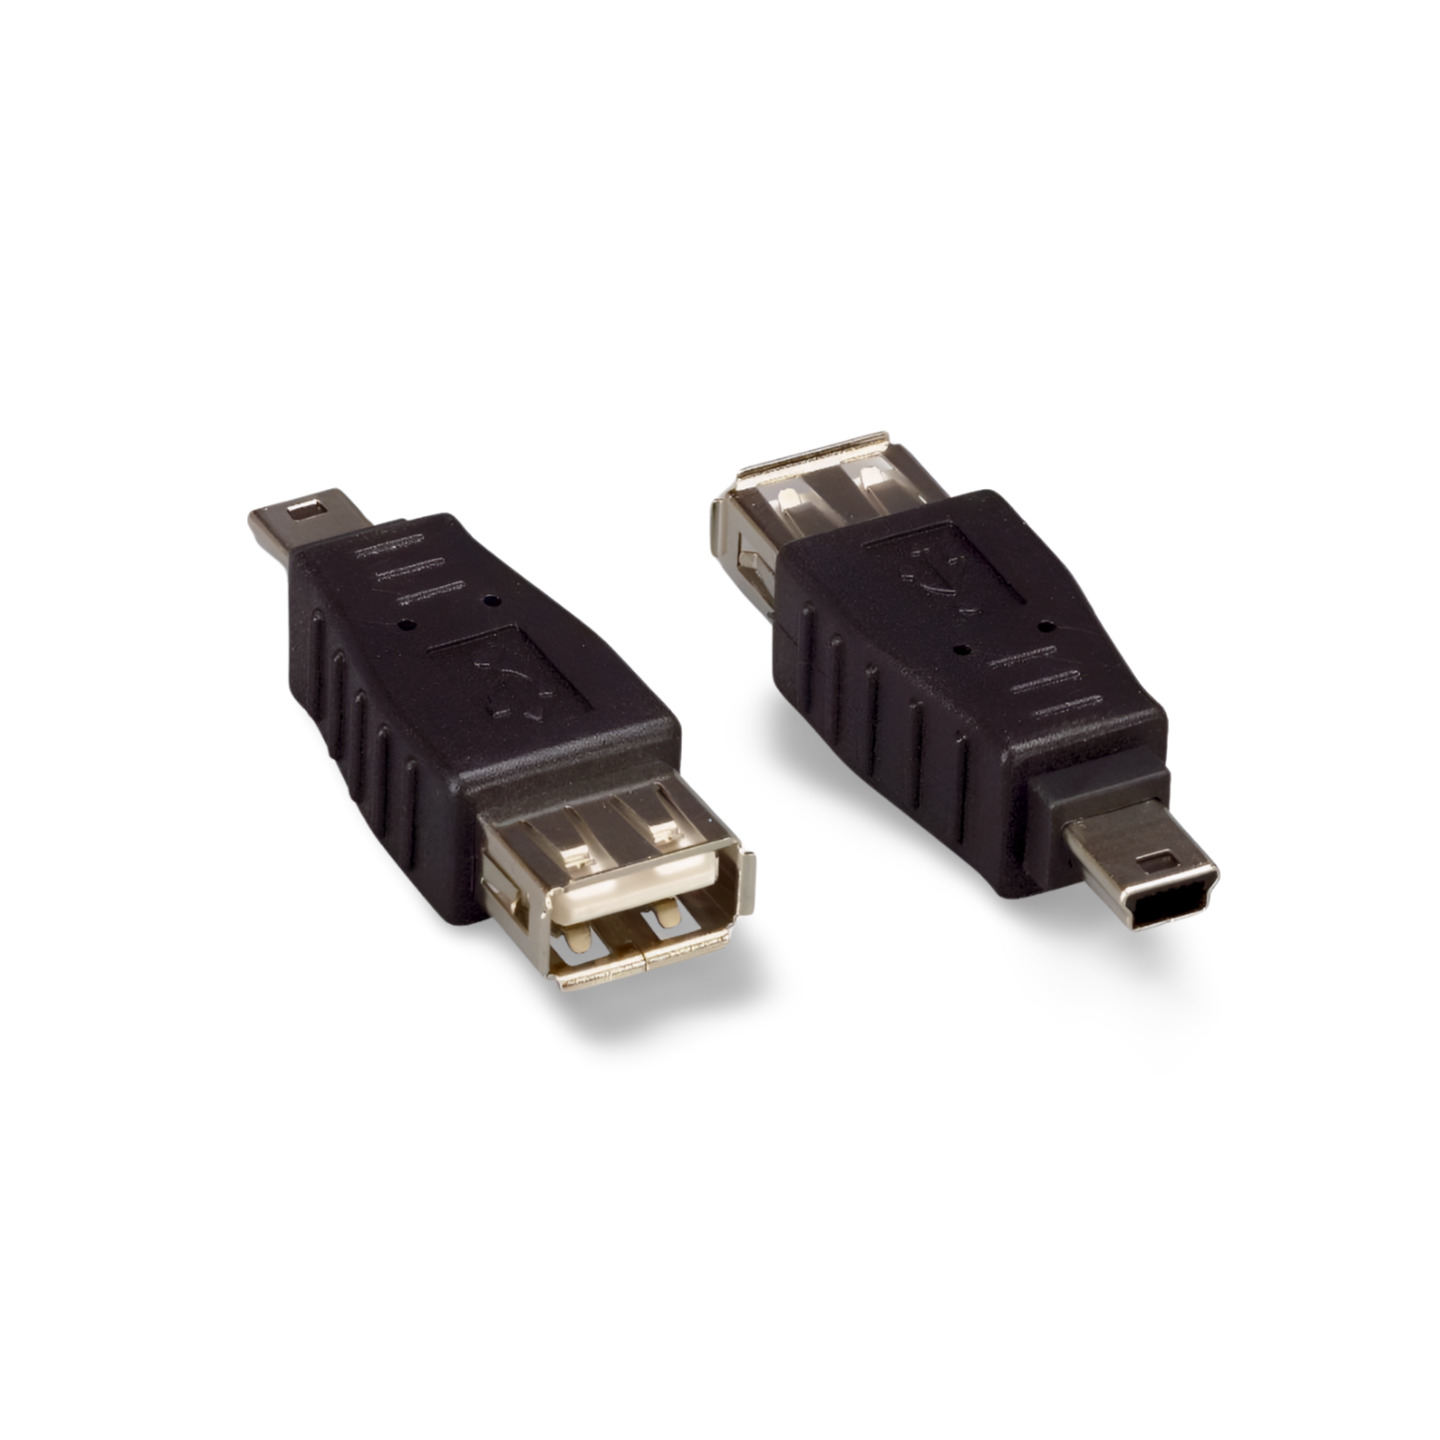 1in USB Camera Adapter Type A Male to Mini B 5 Male - Black